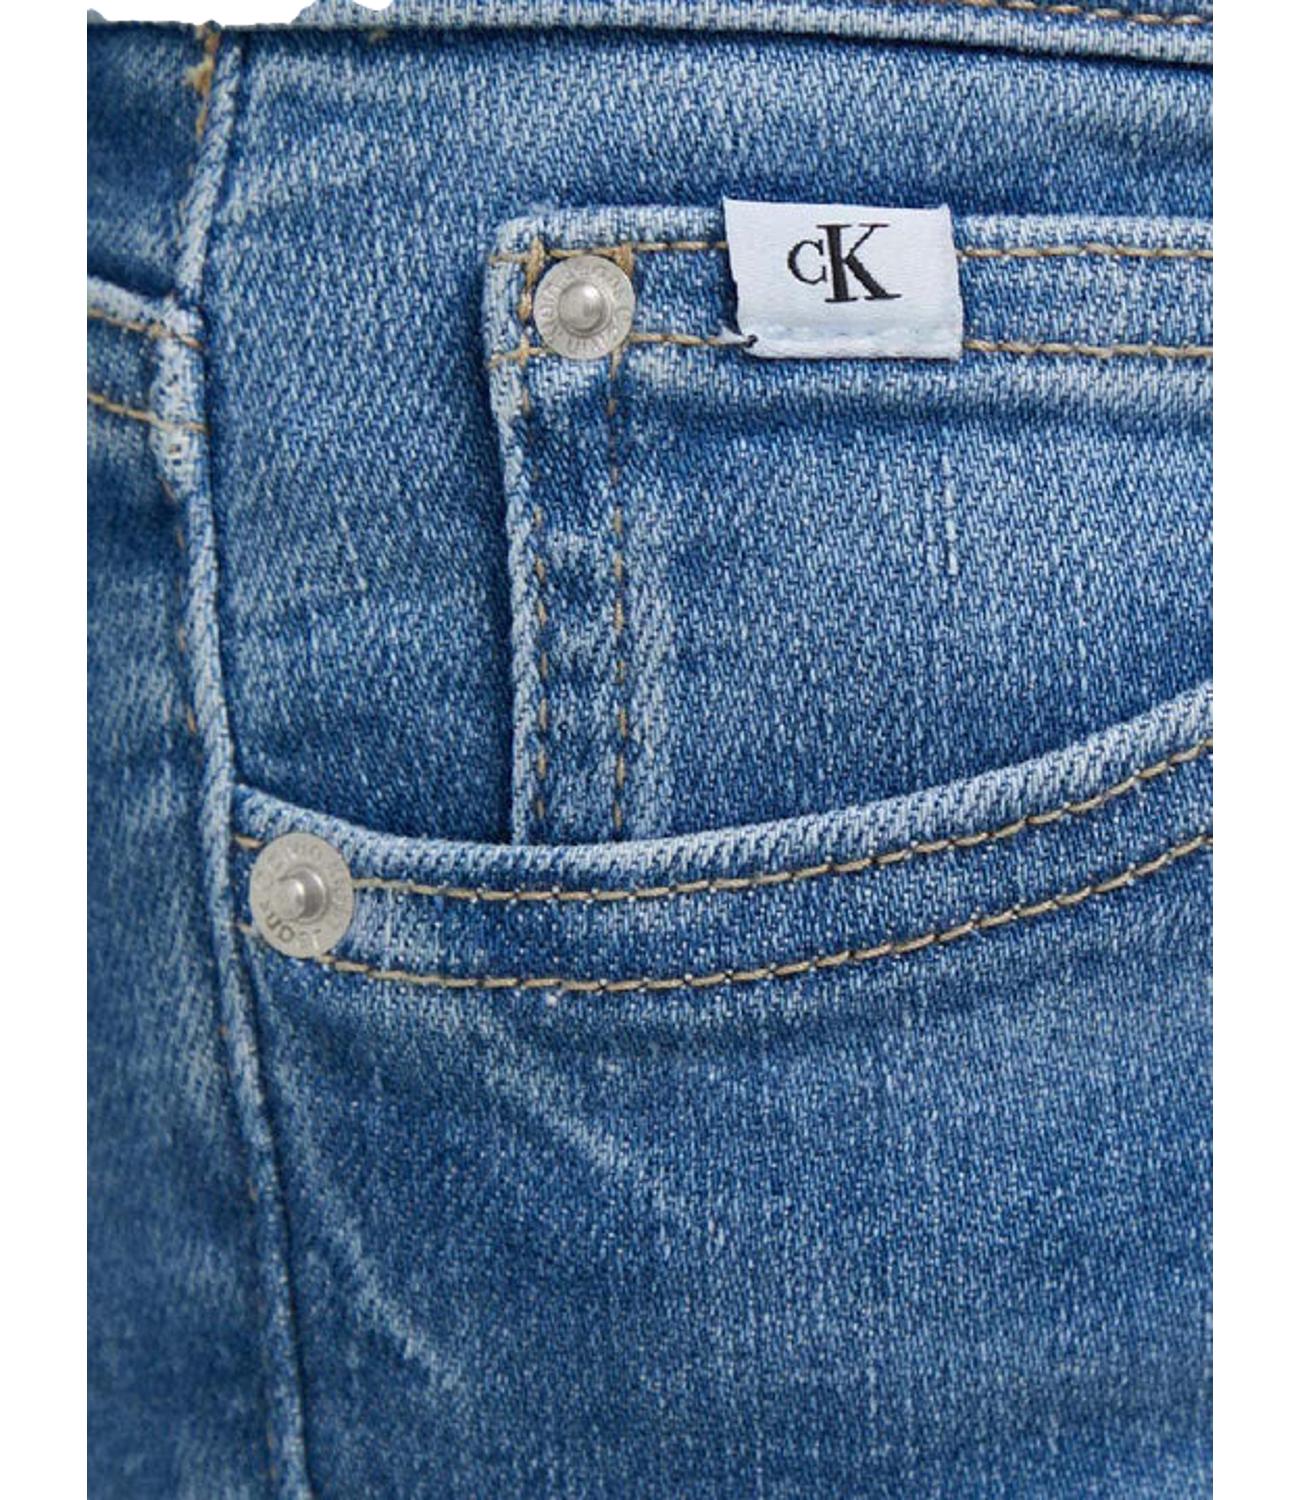 Skinny fit light denim jeans with ck logo